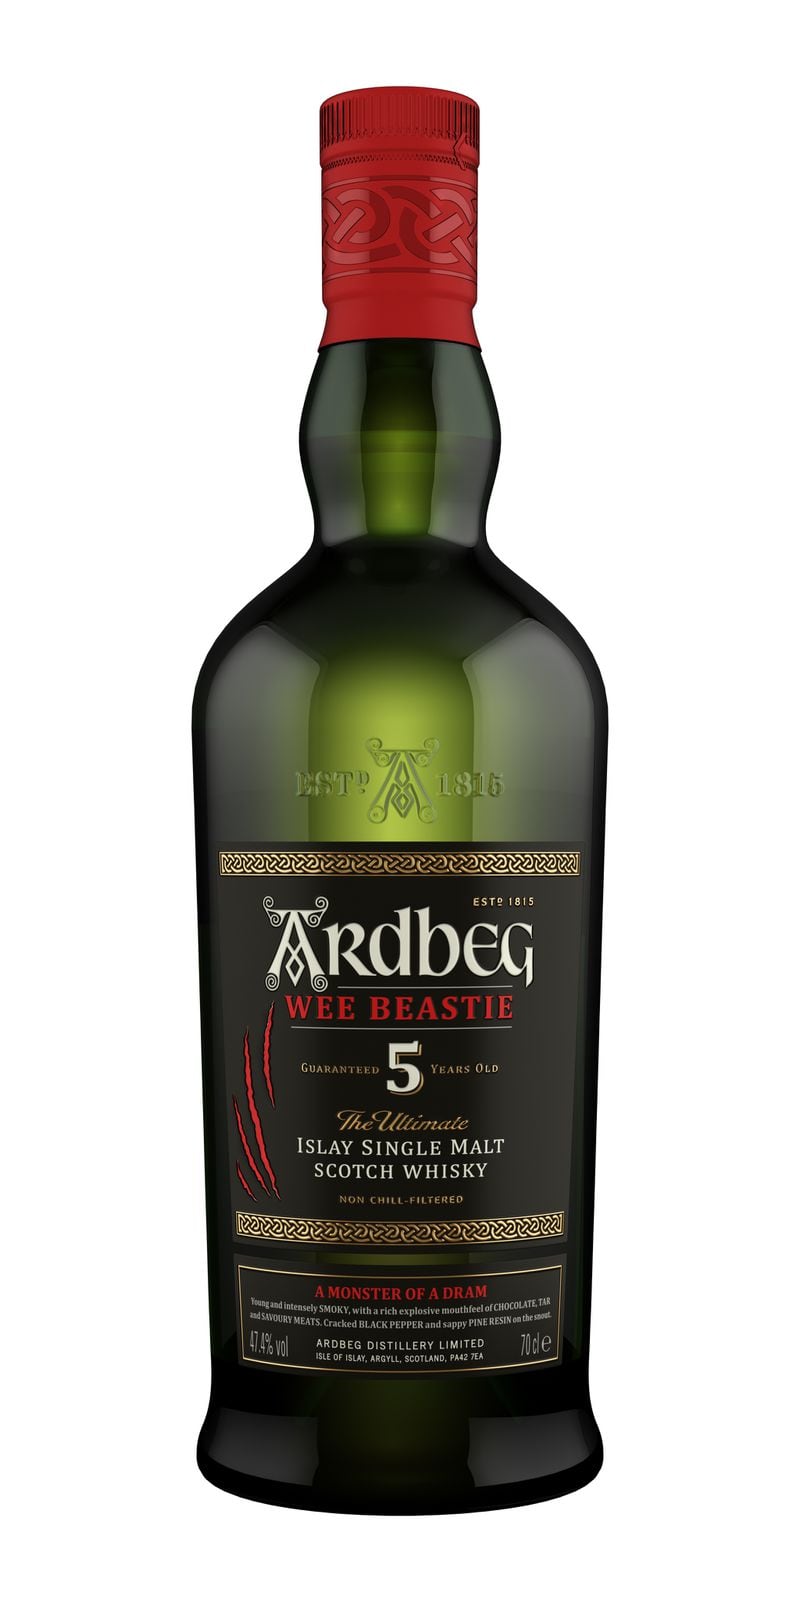 Ardbeg's Wee Beastie single-malt Scotch is aged in bourbon and oloroso sherry casks. Courtesy of Ardbeg